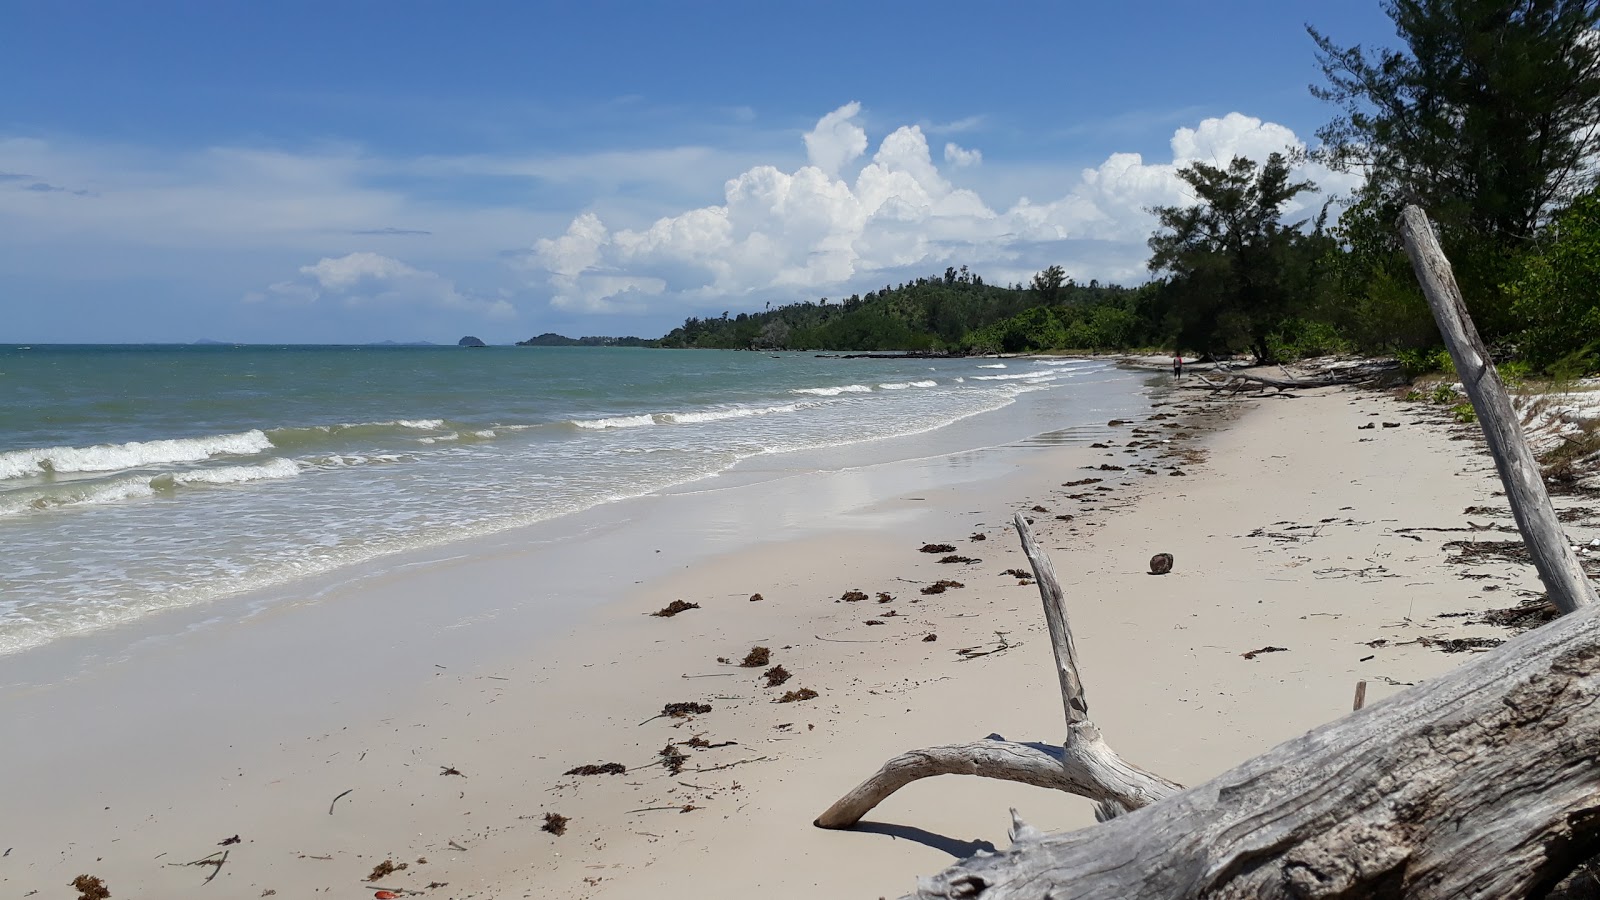 Photo de Tegar Putri Beach situé dans une zone naturelle